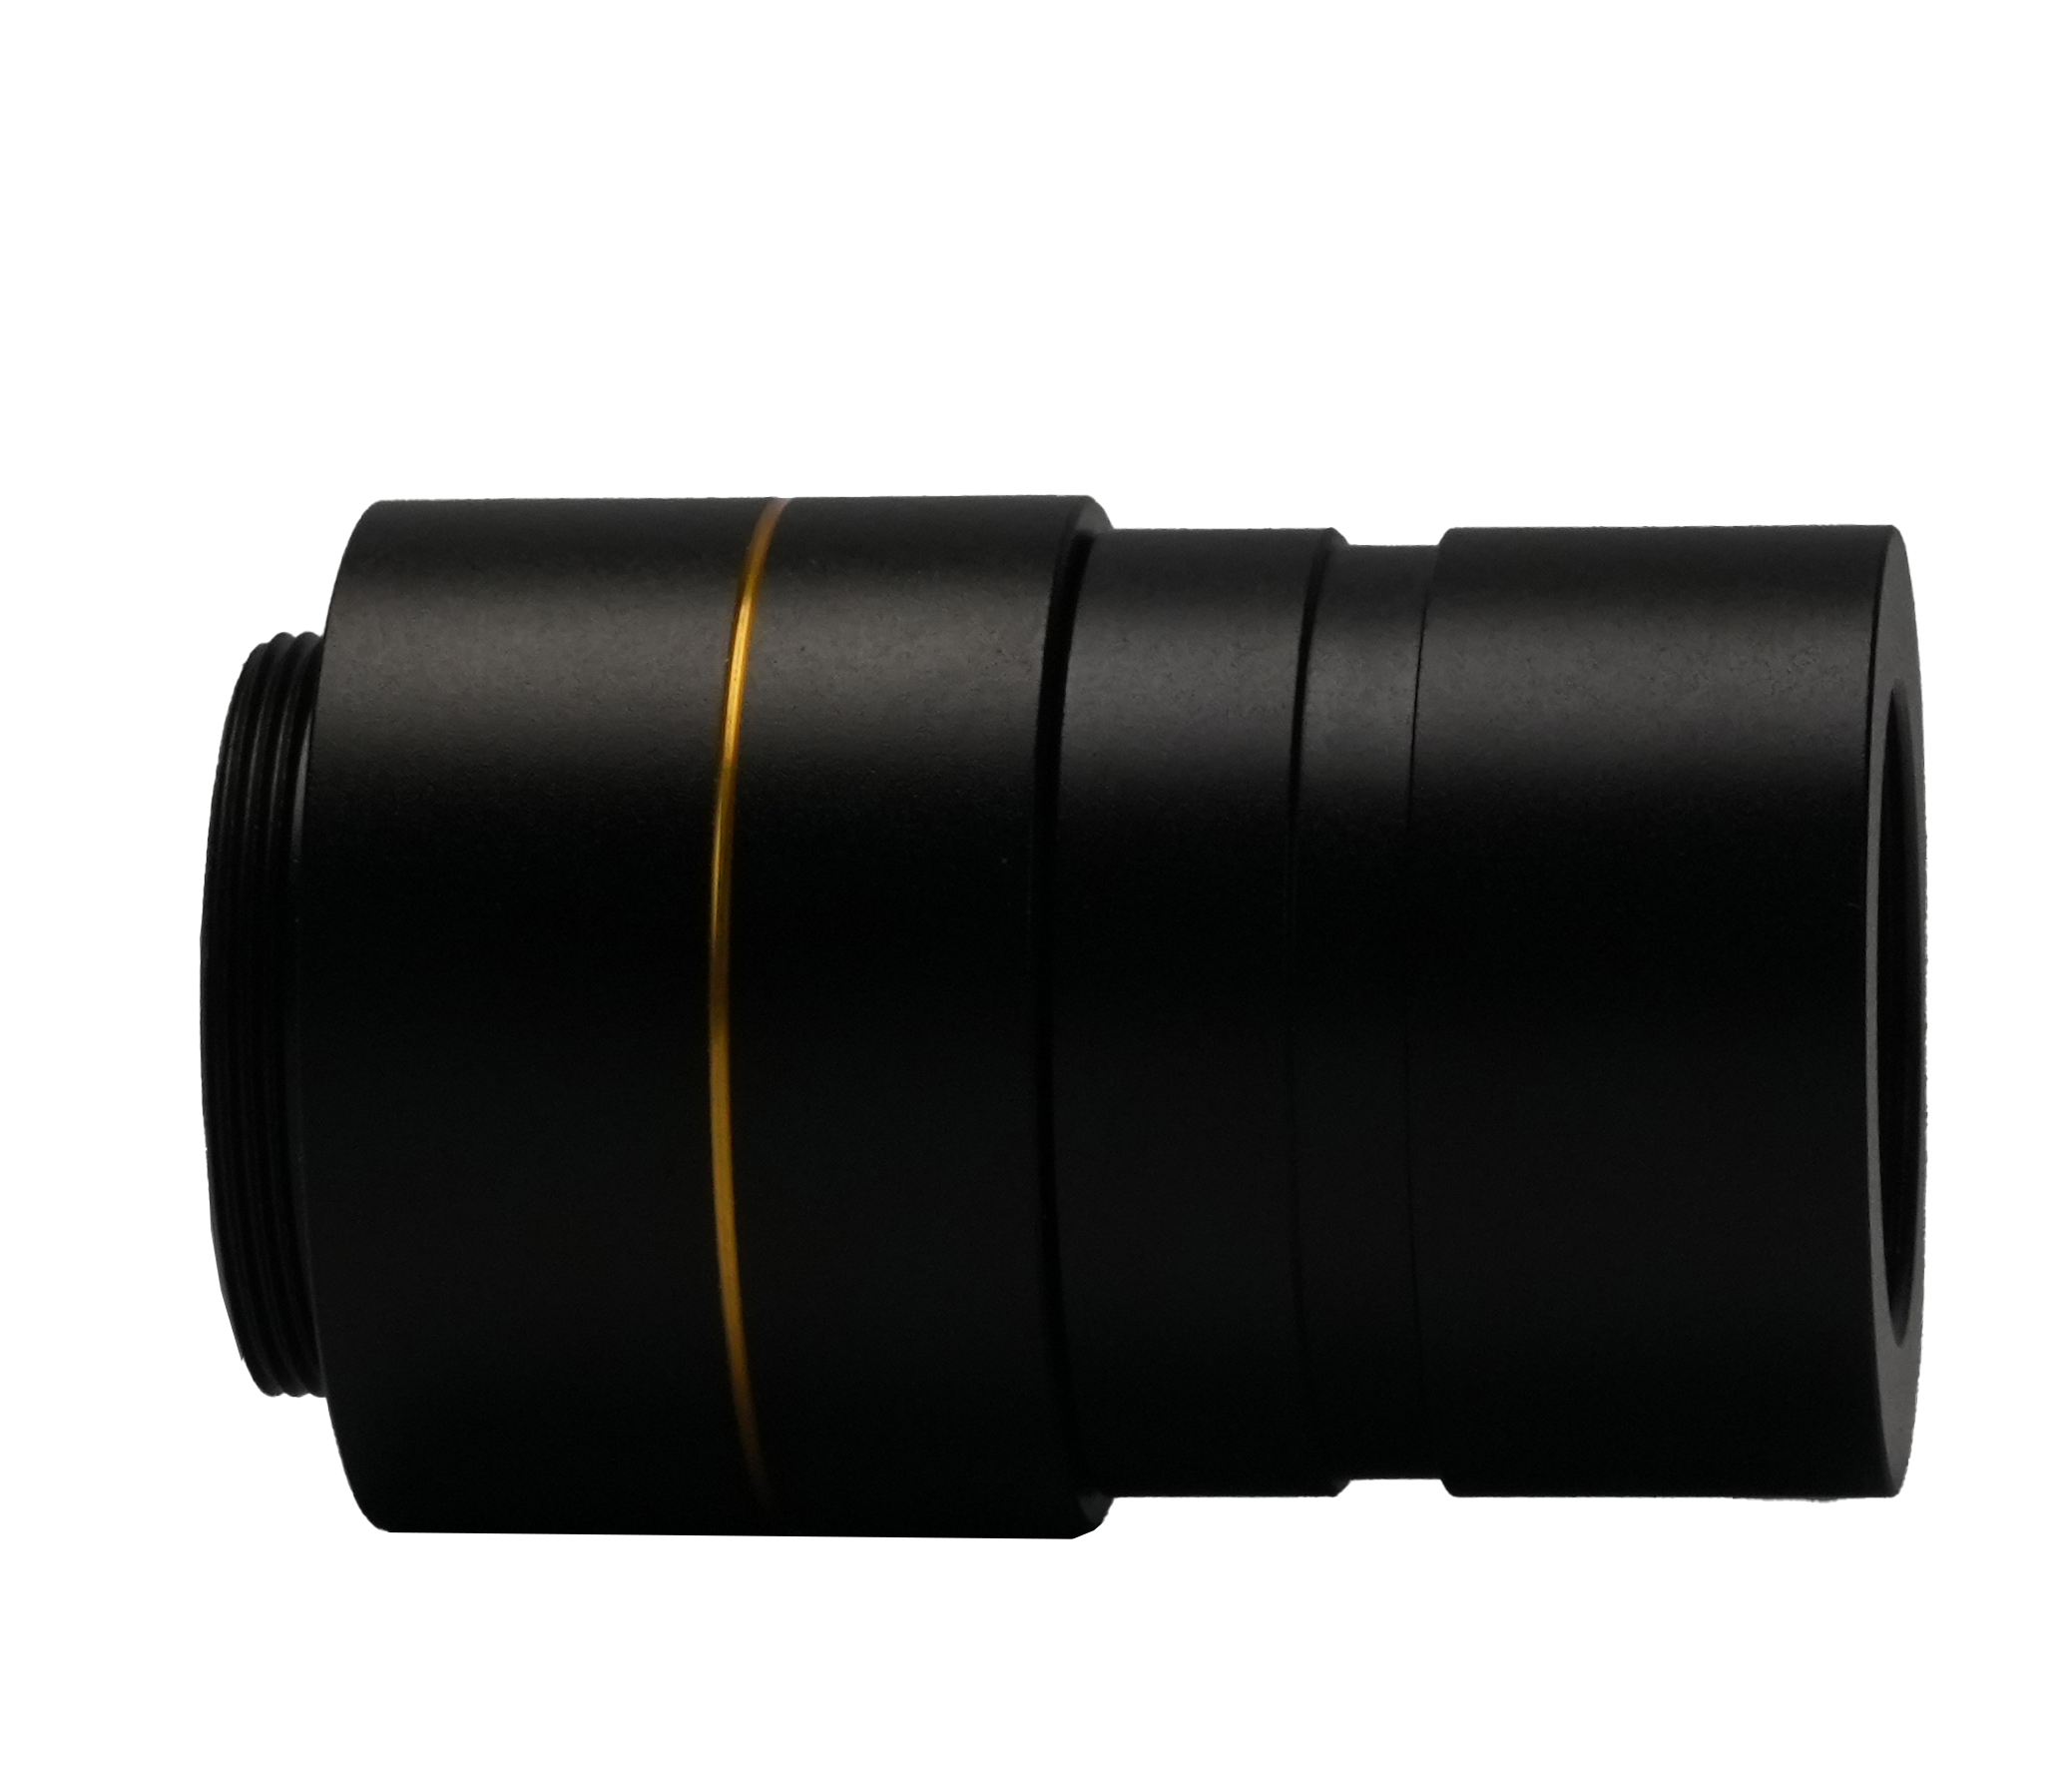 BCN3F-0.5x Fixed 31.75mm Microscope Eyepiece Adapter